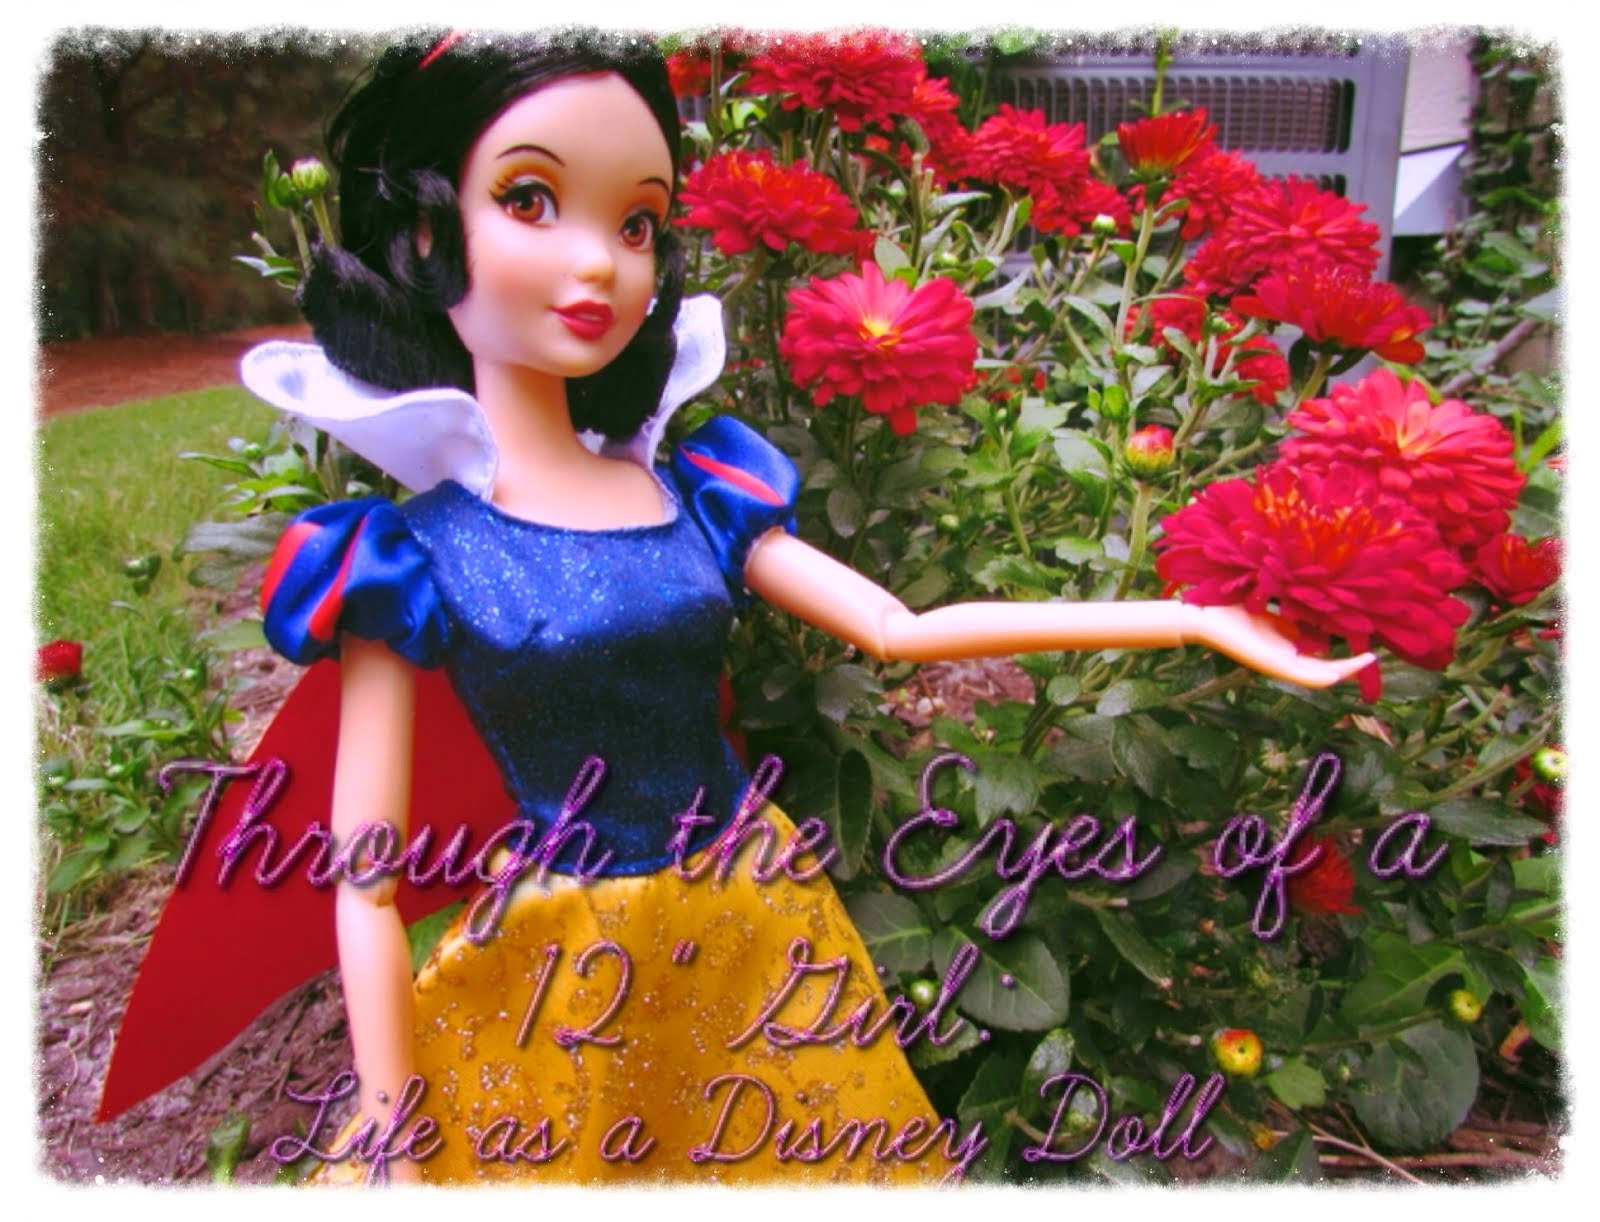 Through the Eyes of a 12" Girl: Life as a Disney Doll